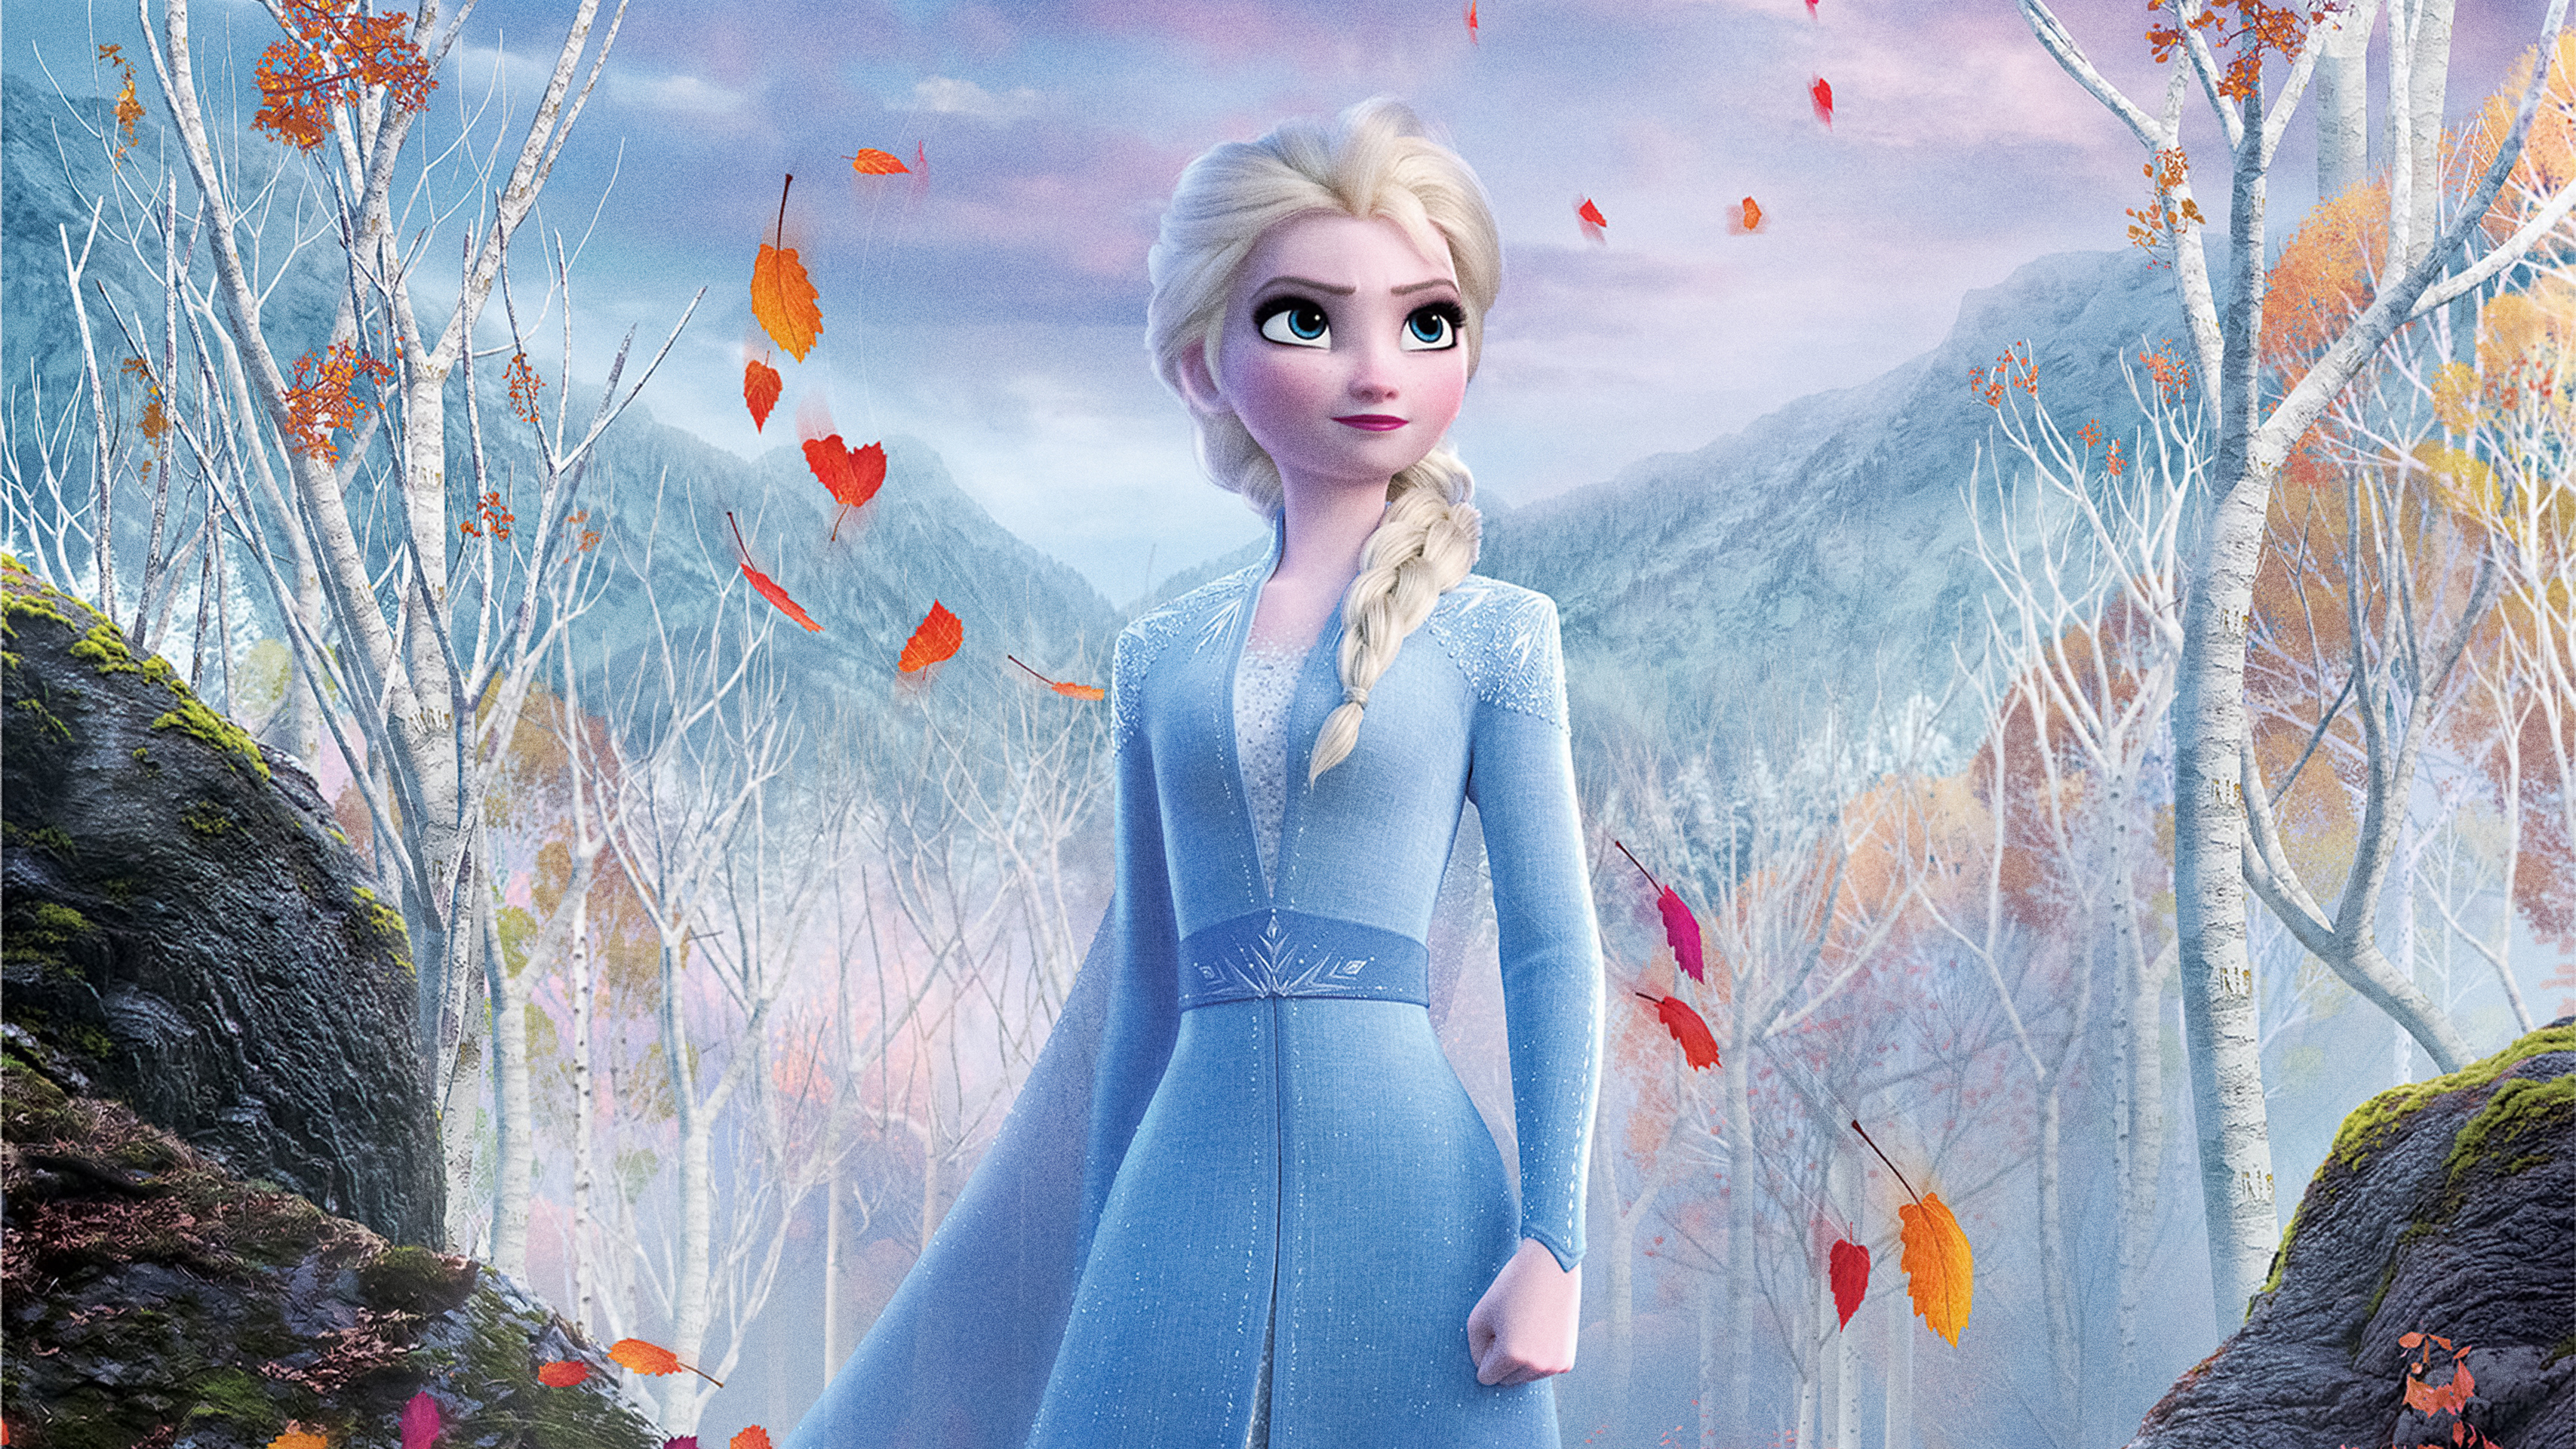 General 3414x1920 Frozen (movie) Frozen 2 Elsa movies movie characters Disney princesses